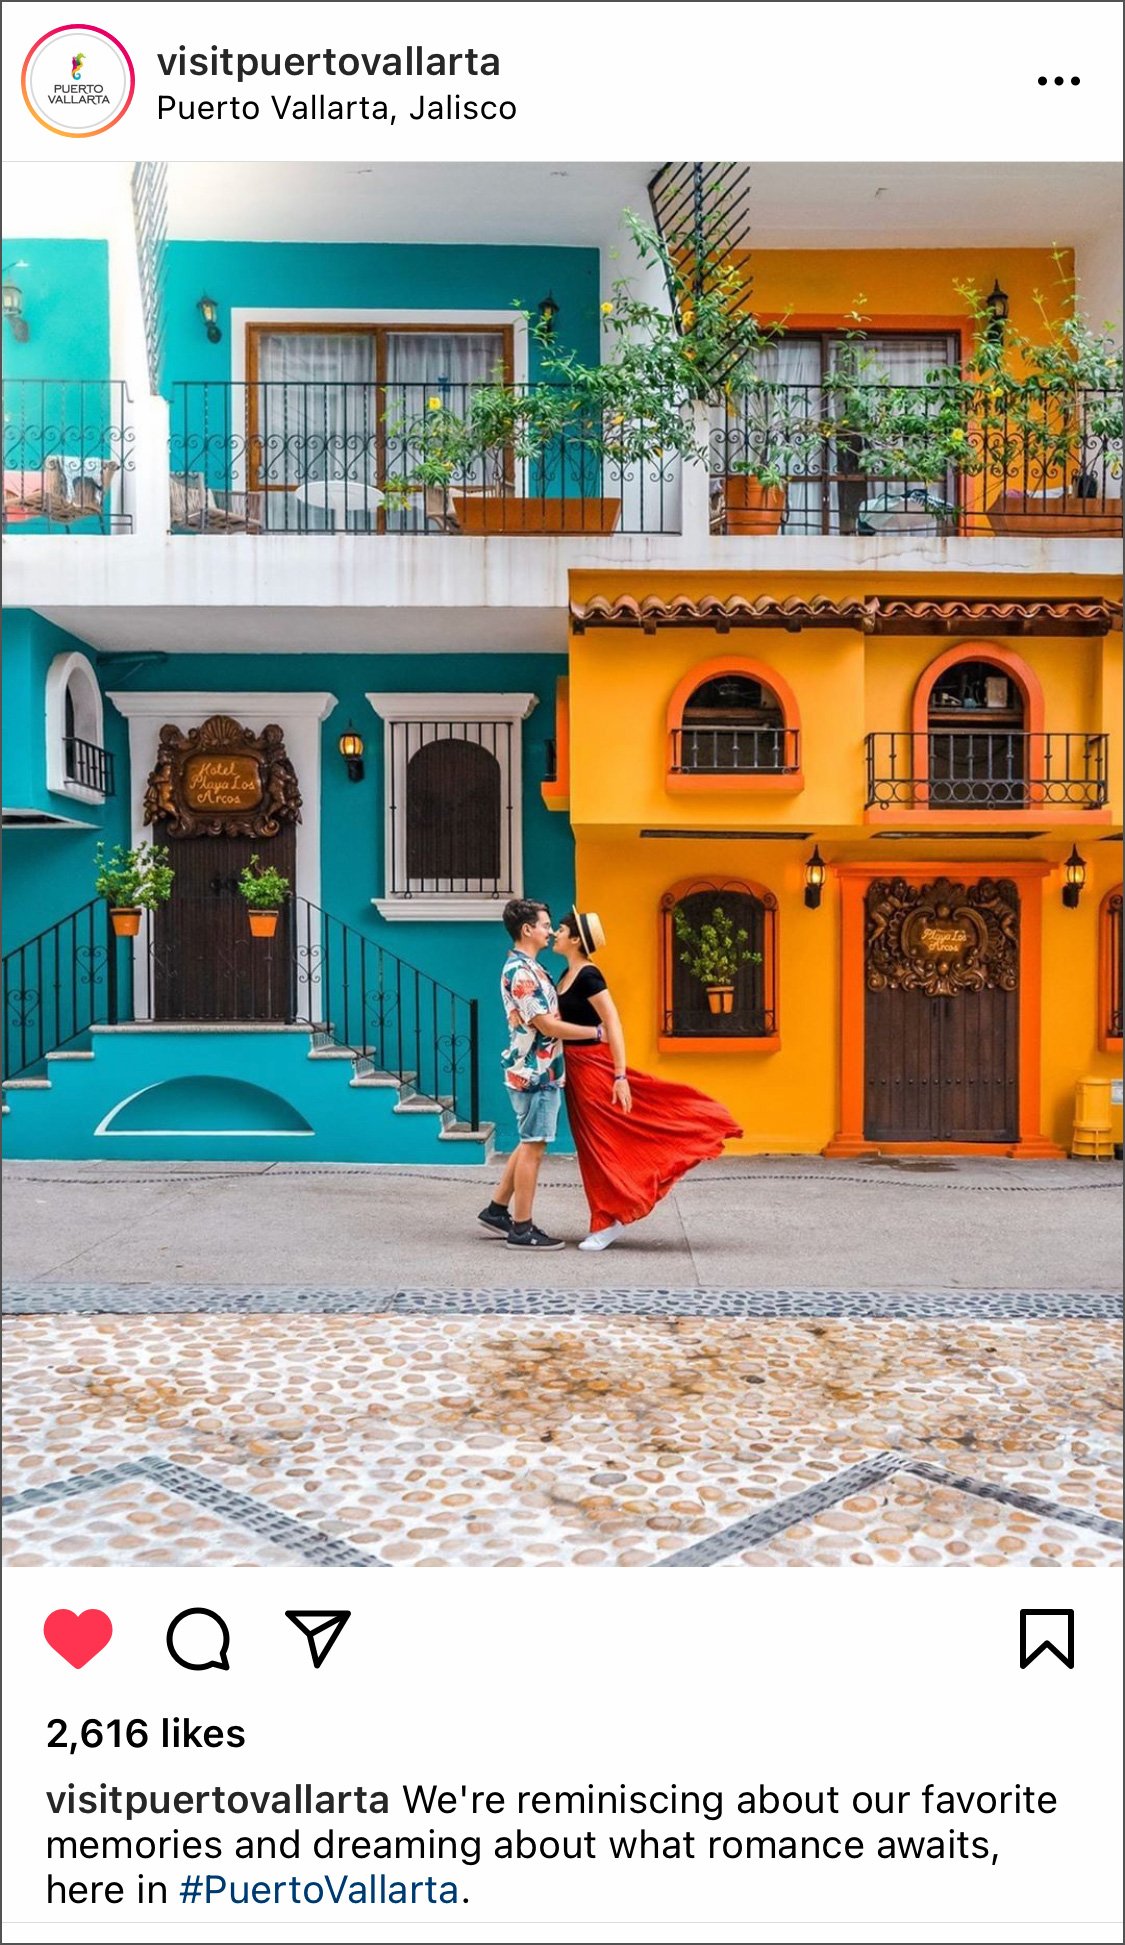 Instagrammable spots in Puerto Vallarta